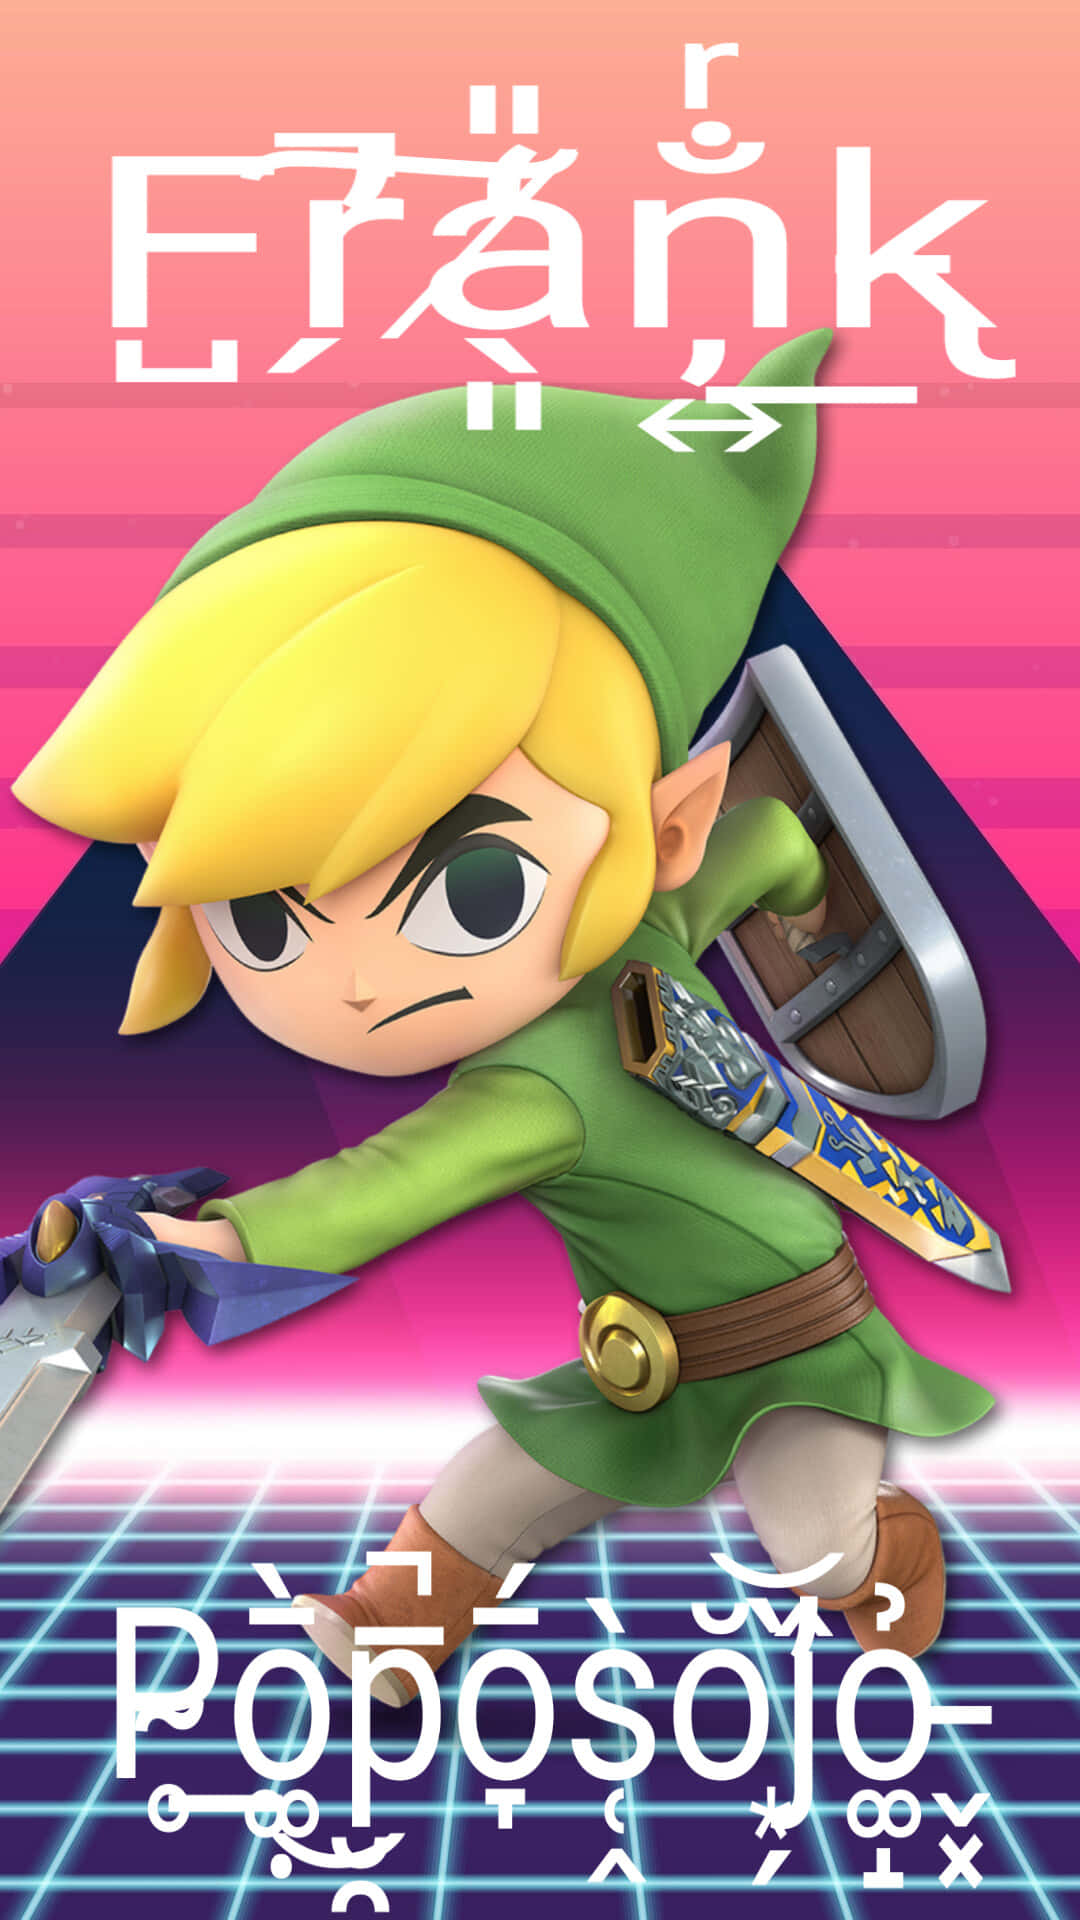 Link The Hero Of Time From Nintendo’s Legend Of Zelda Background